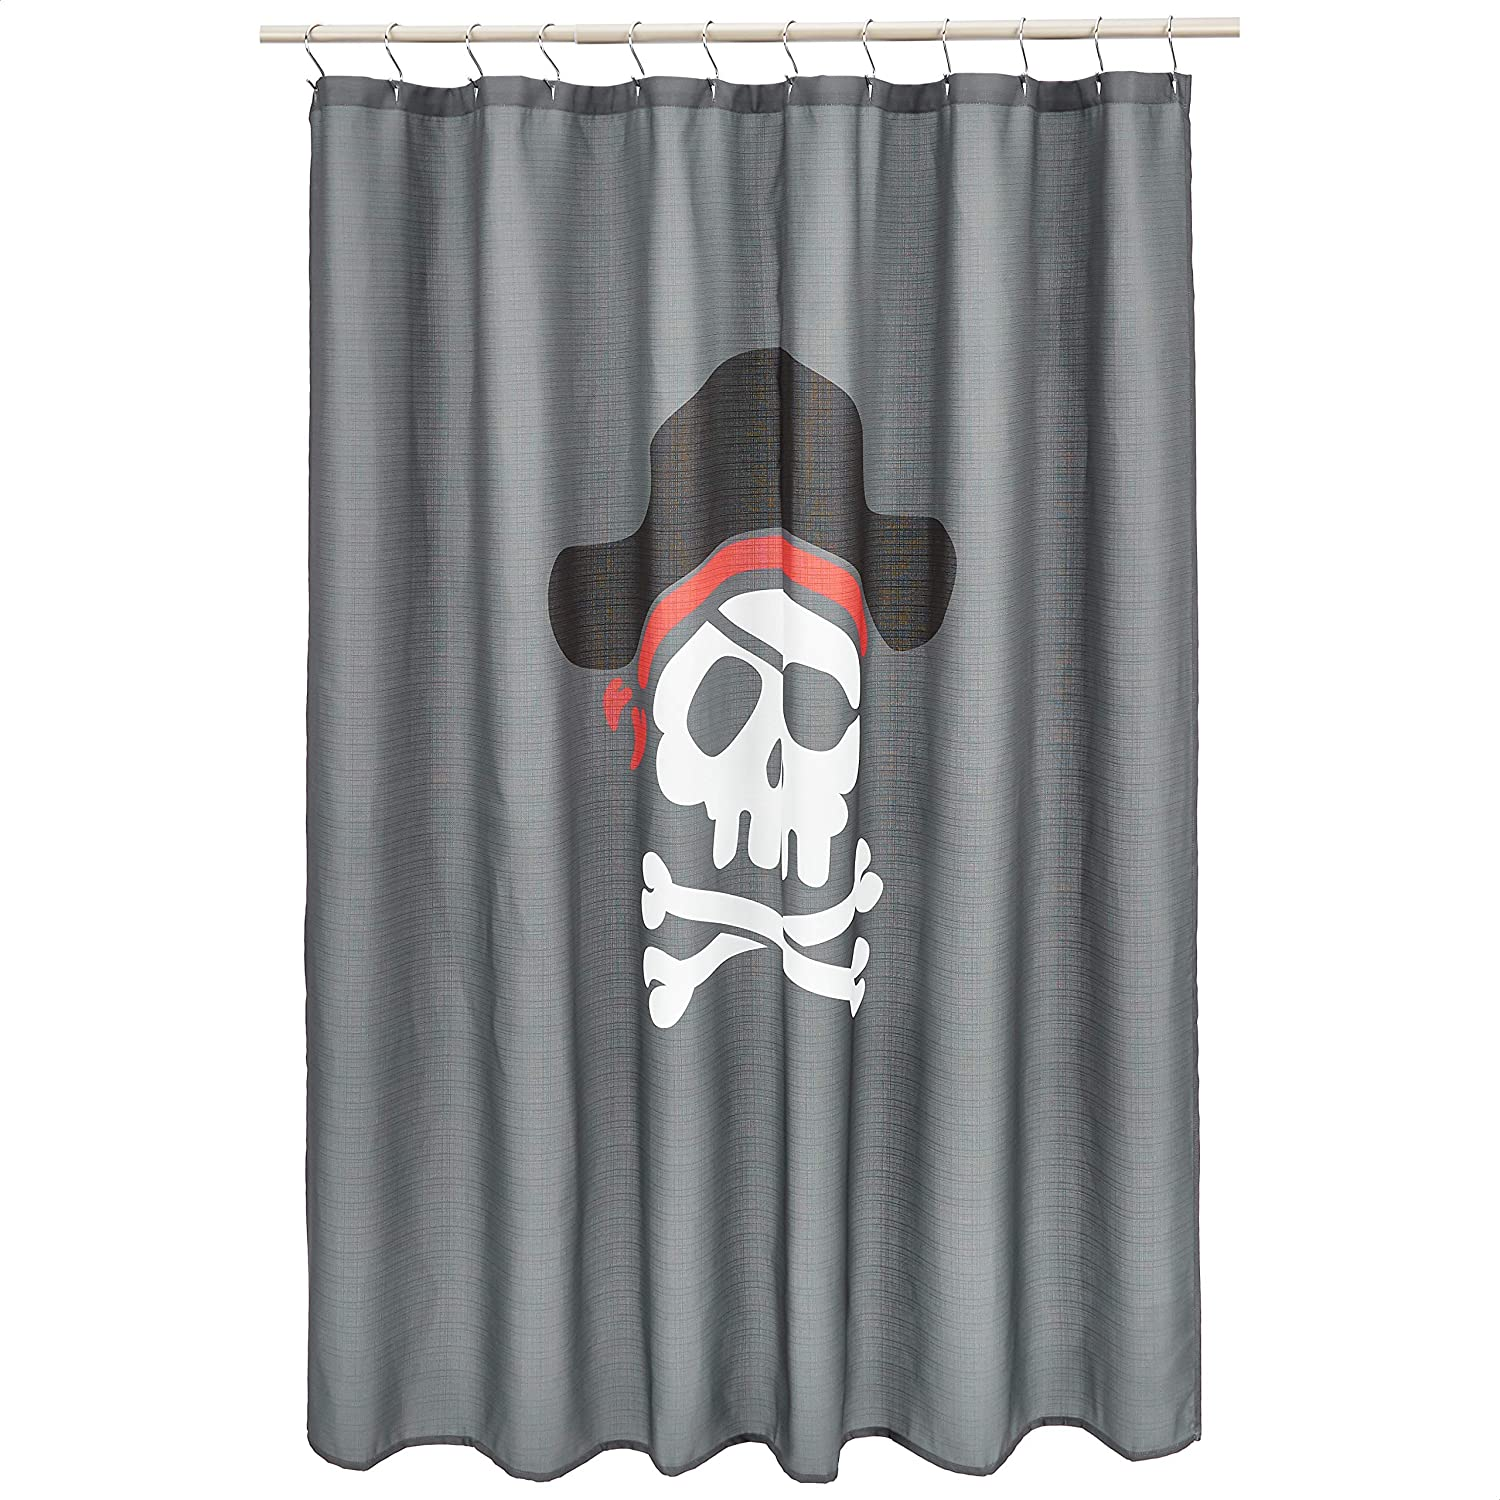 72-In Amazon Basics Pirate Cove Printed Pattern Microfiber Bathroom Shower Curtain $6.72